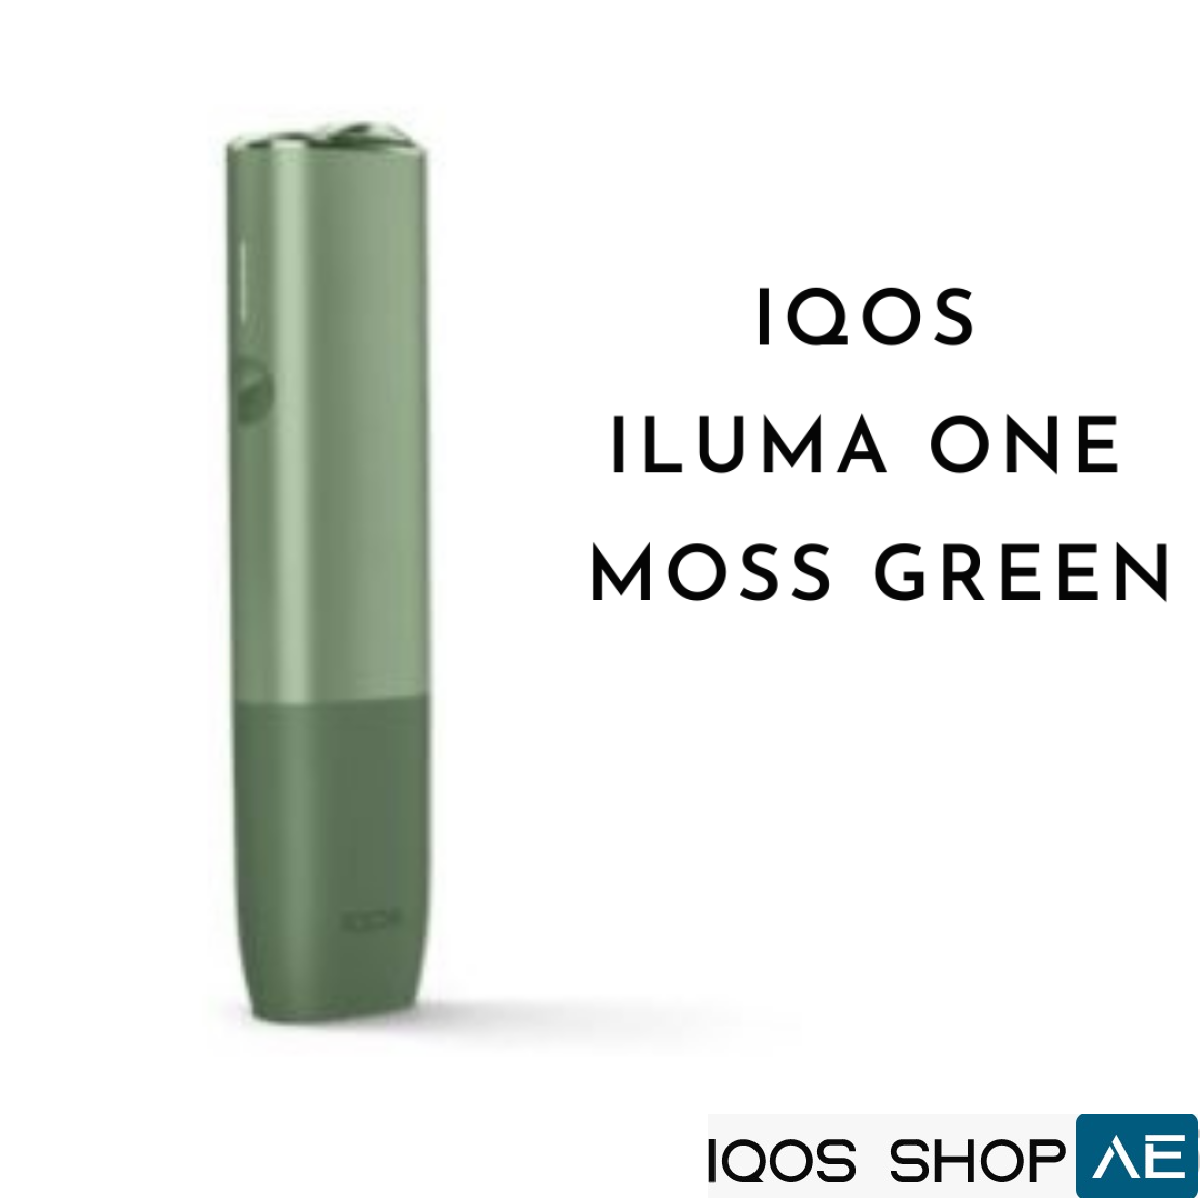 iQOS ILUMA Moss Green